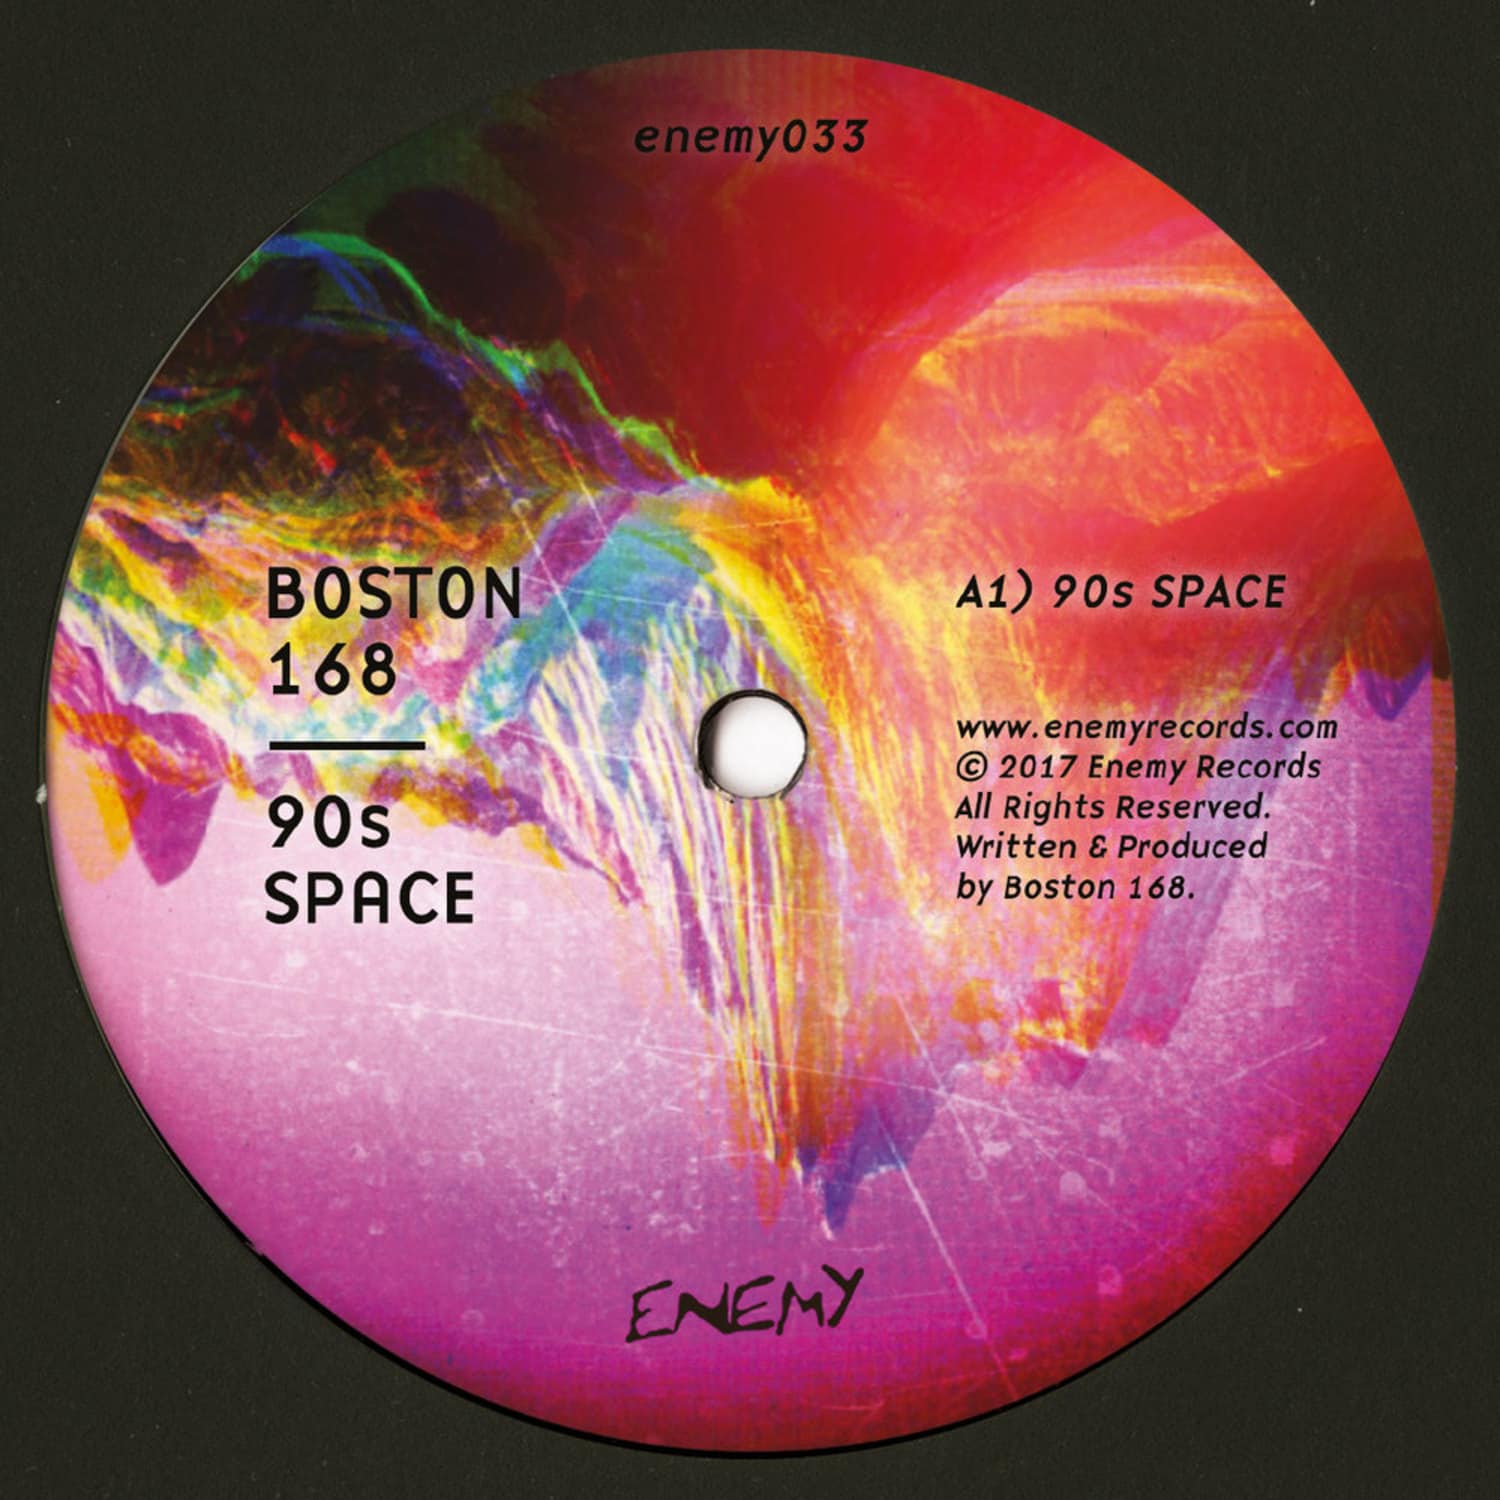 Boston 168 - 90S SPACE